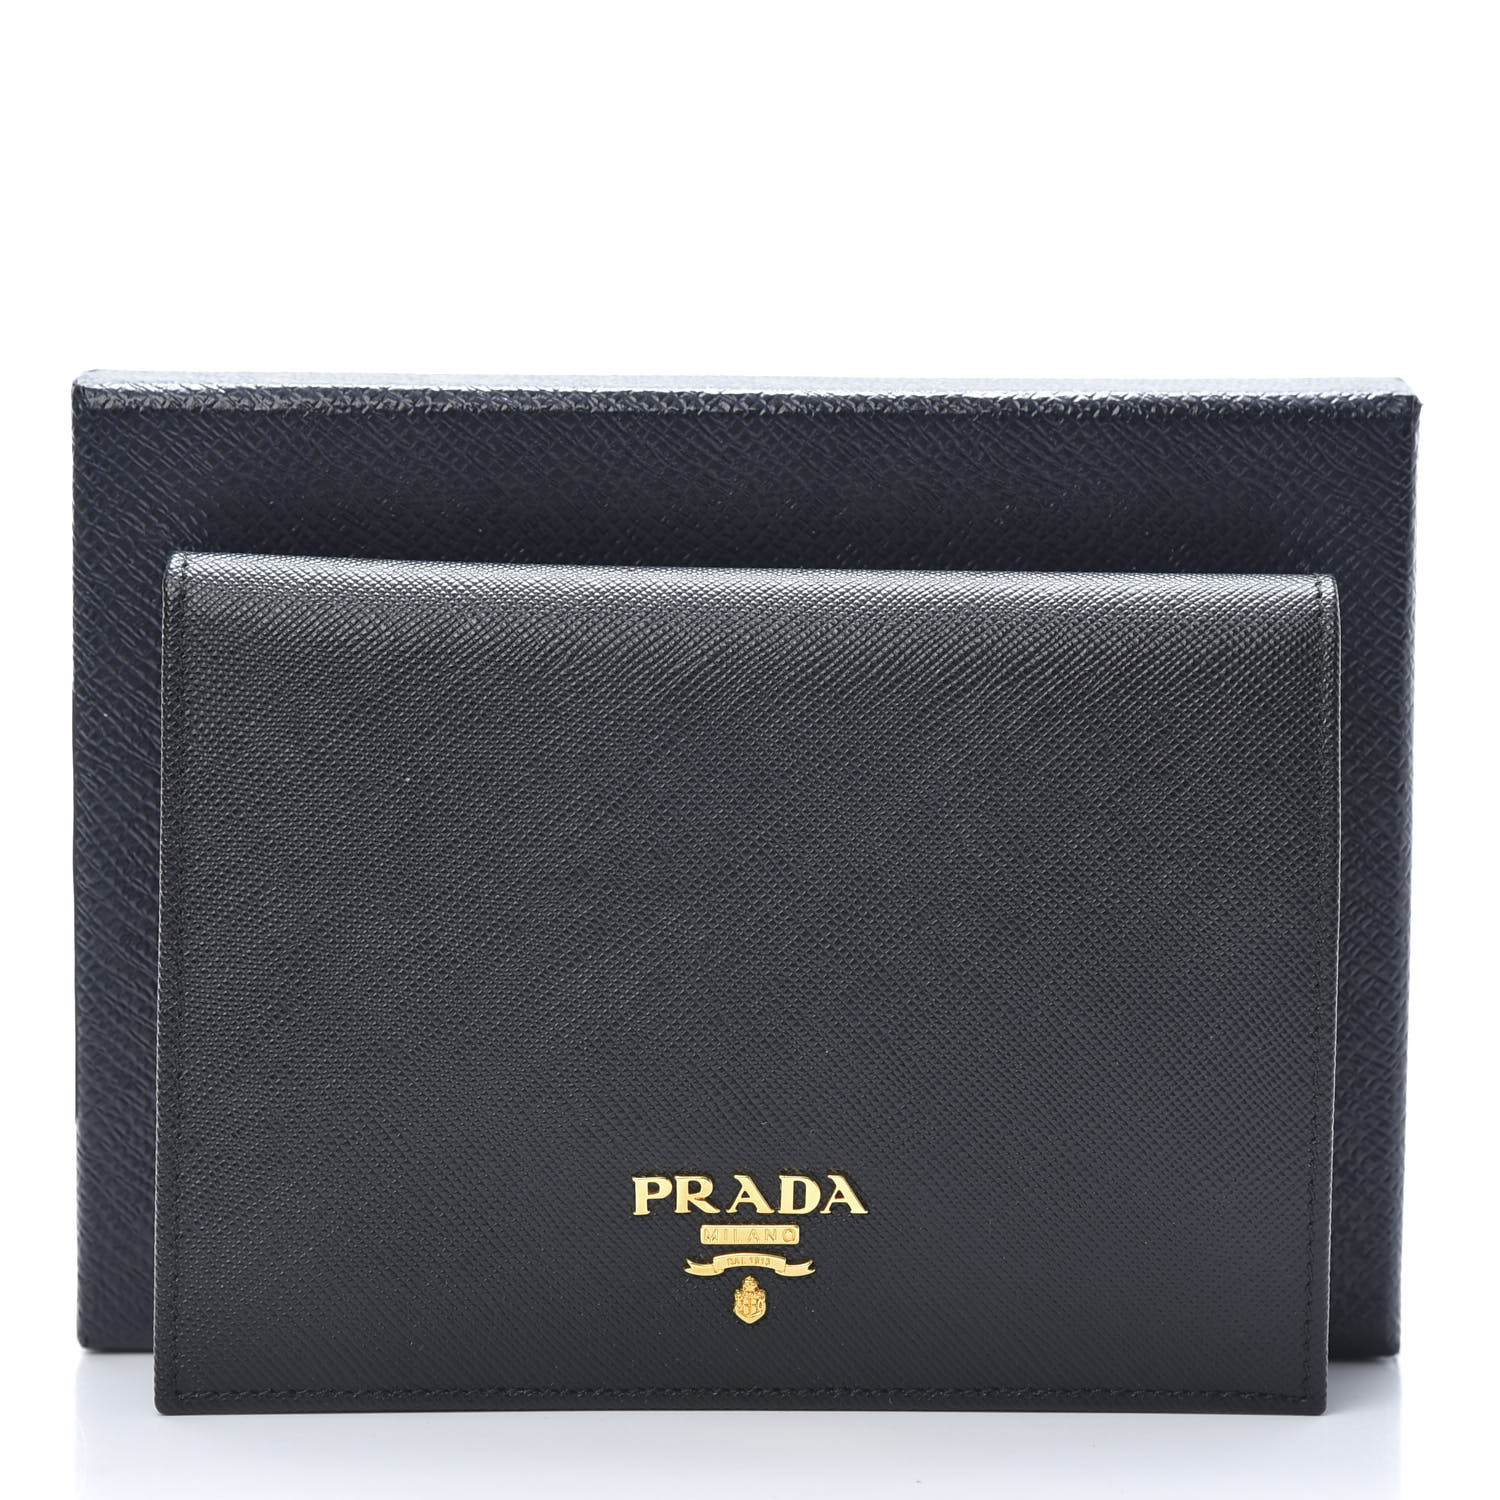 PRADA Saffiano Metal Flap Passport Holder Black 672758 | FASHIONPHILE